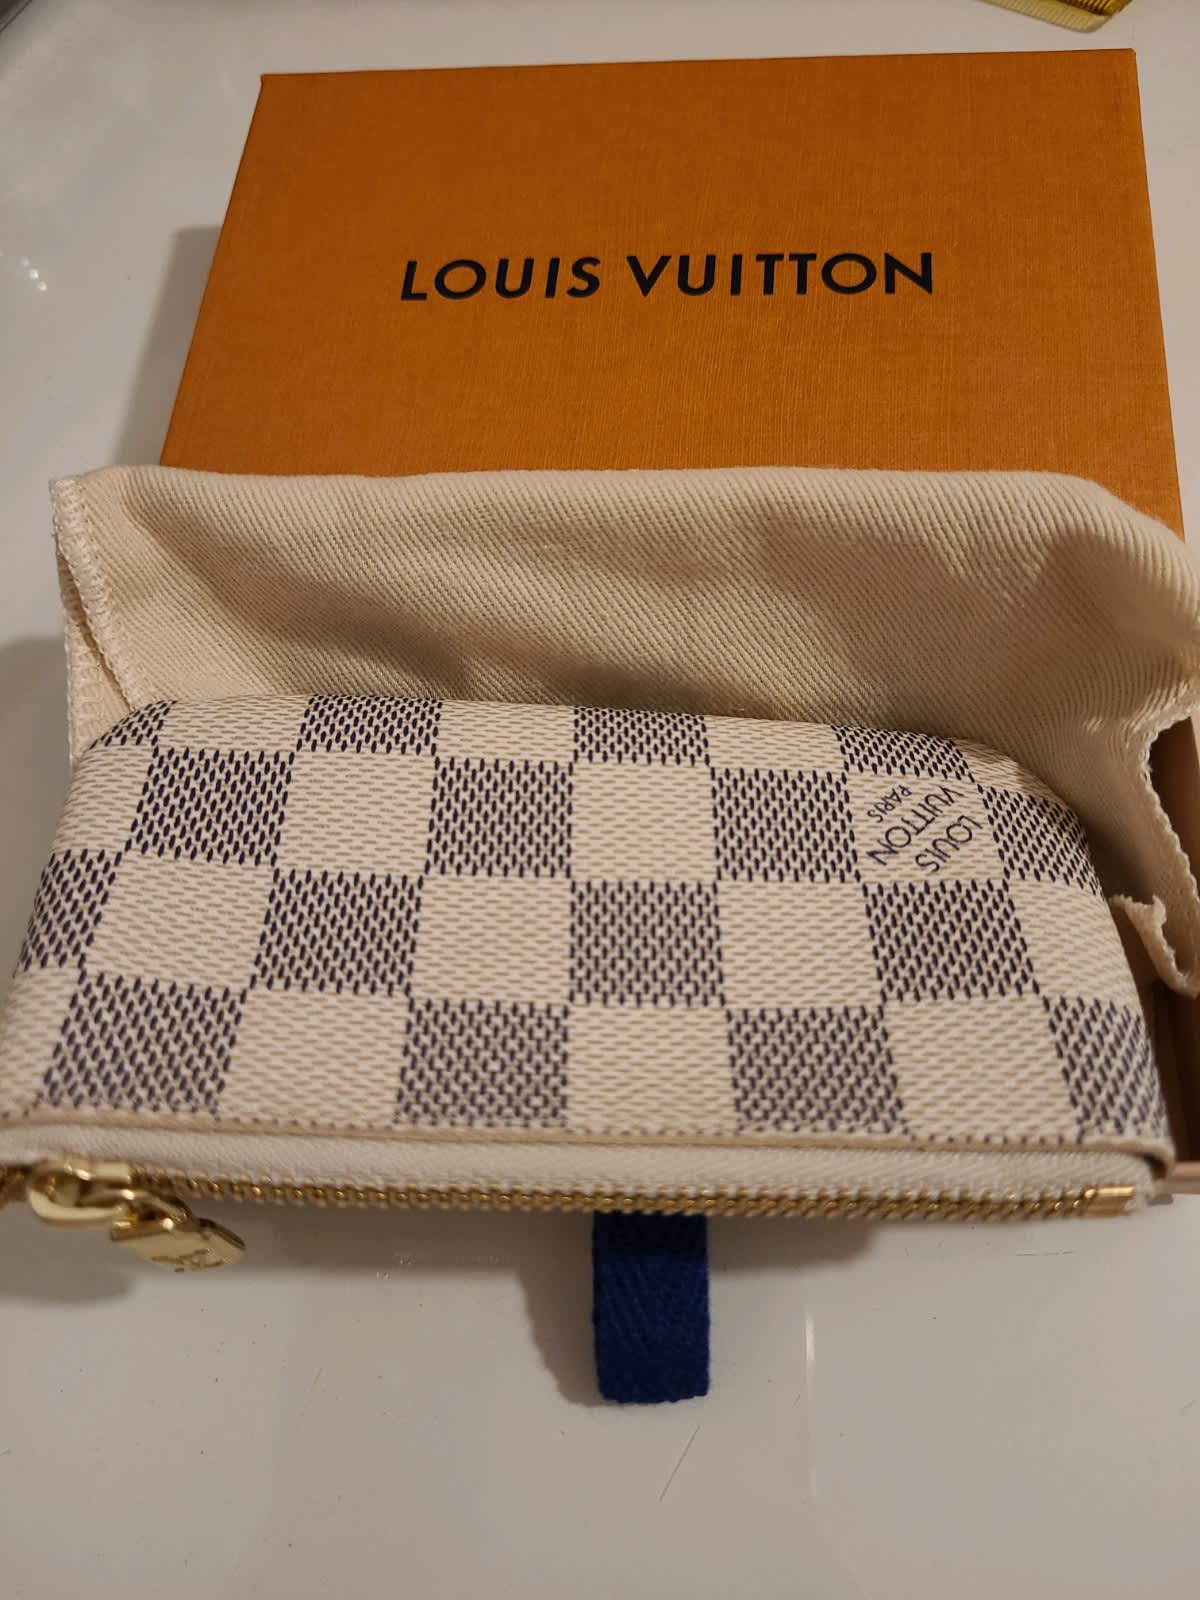 Louis Vuitton Verona Damier Ebene - THE PURSE AFFAIR